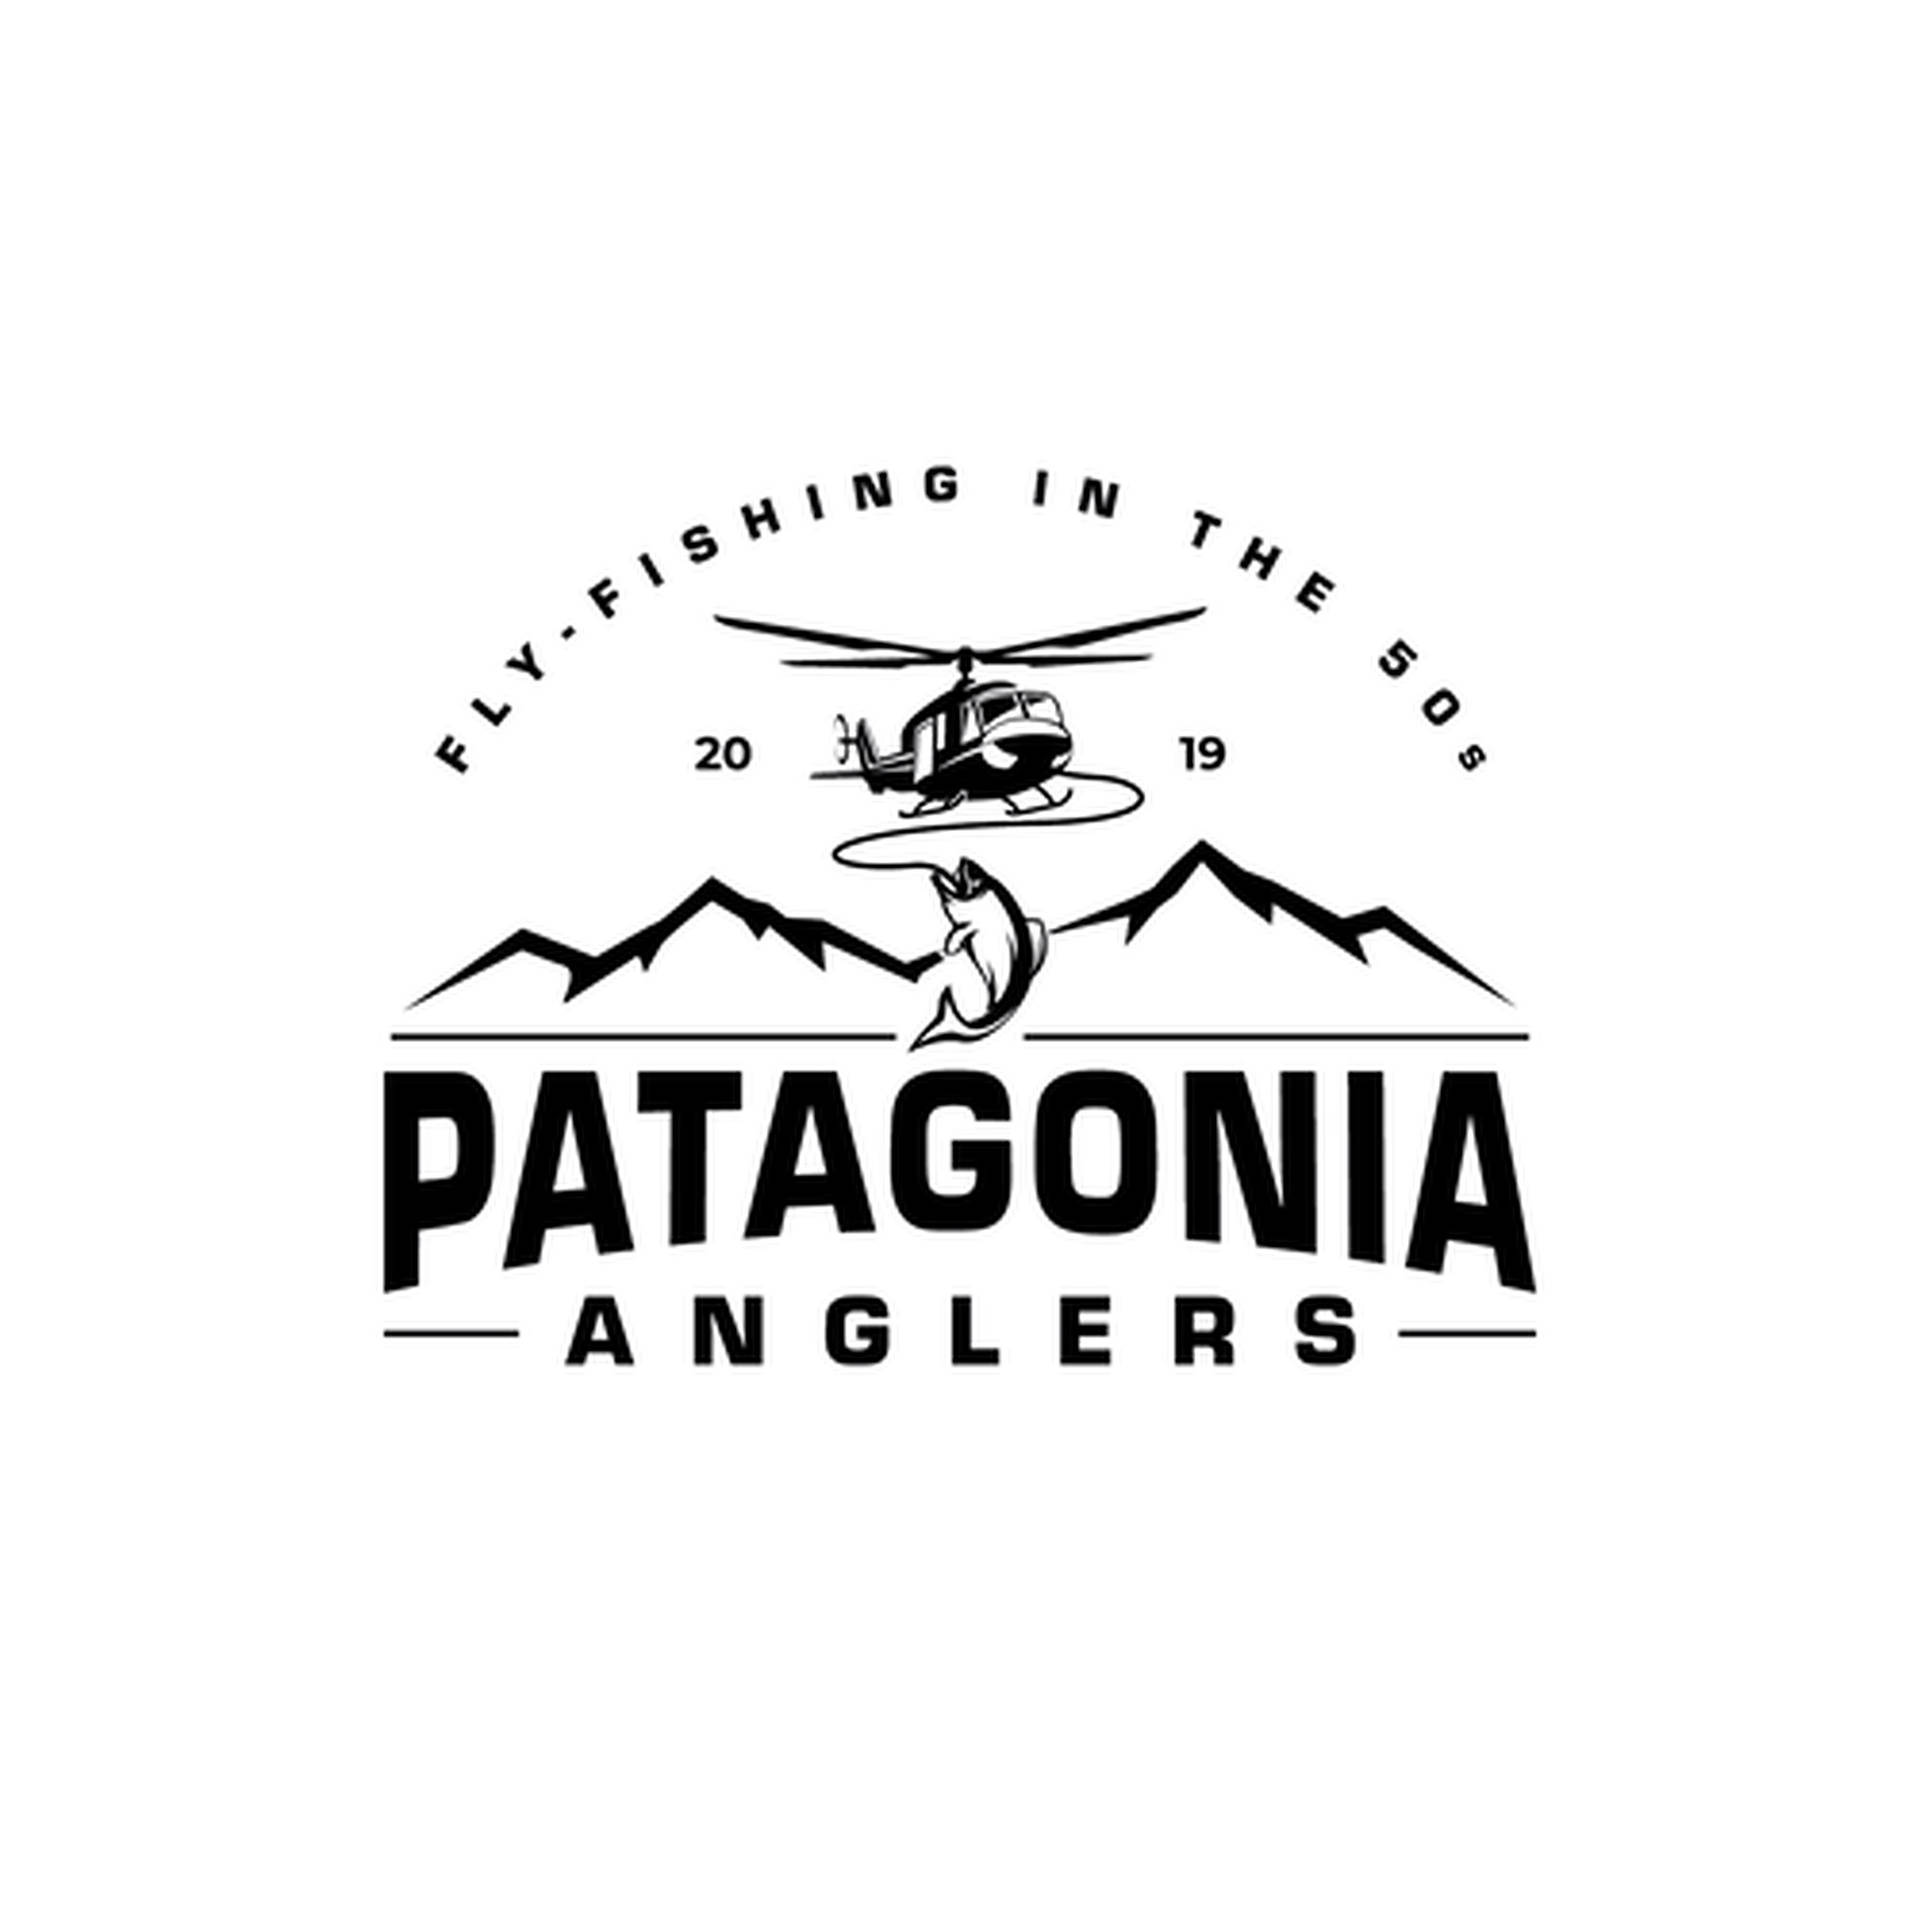 Patagonia Anglers Logo Background